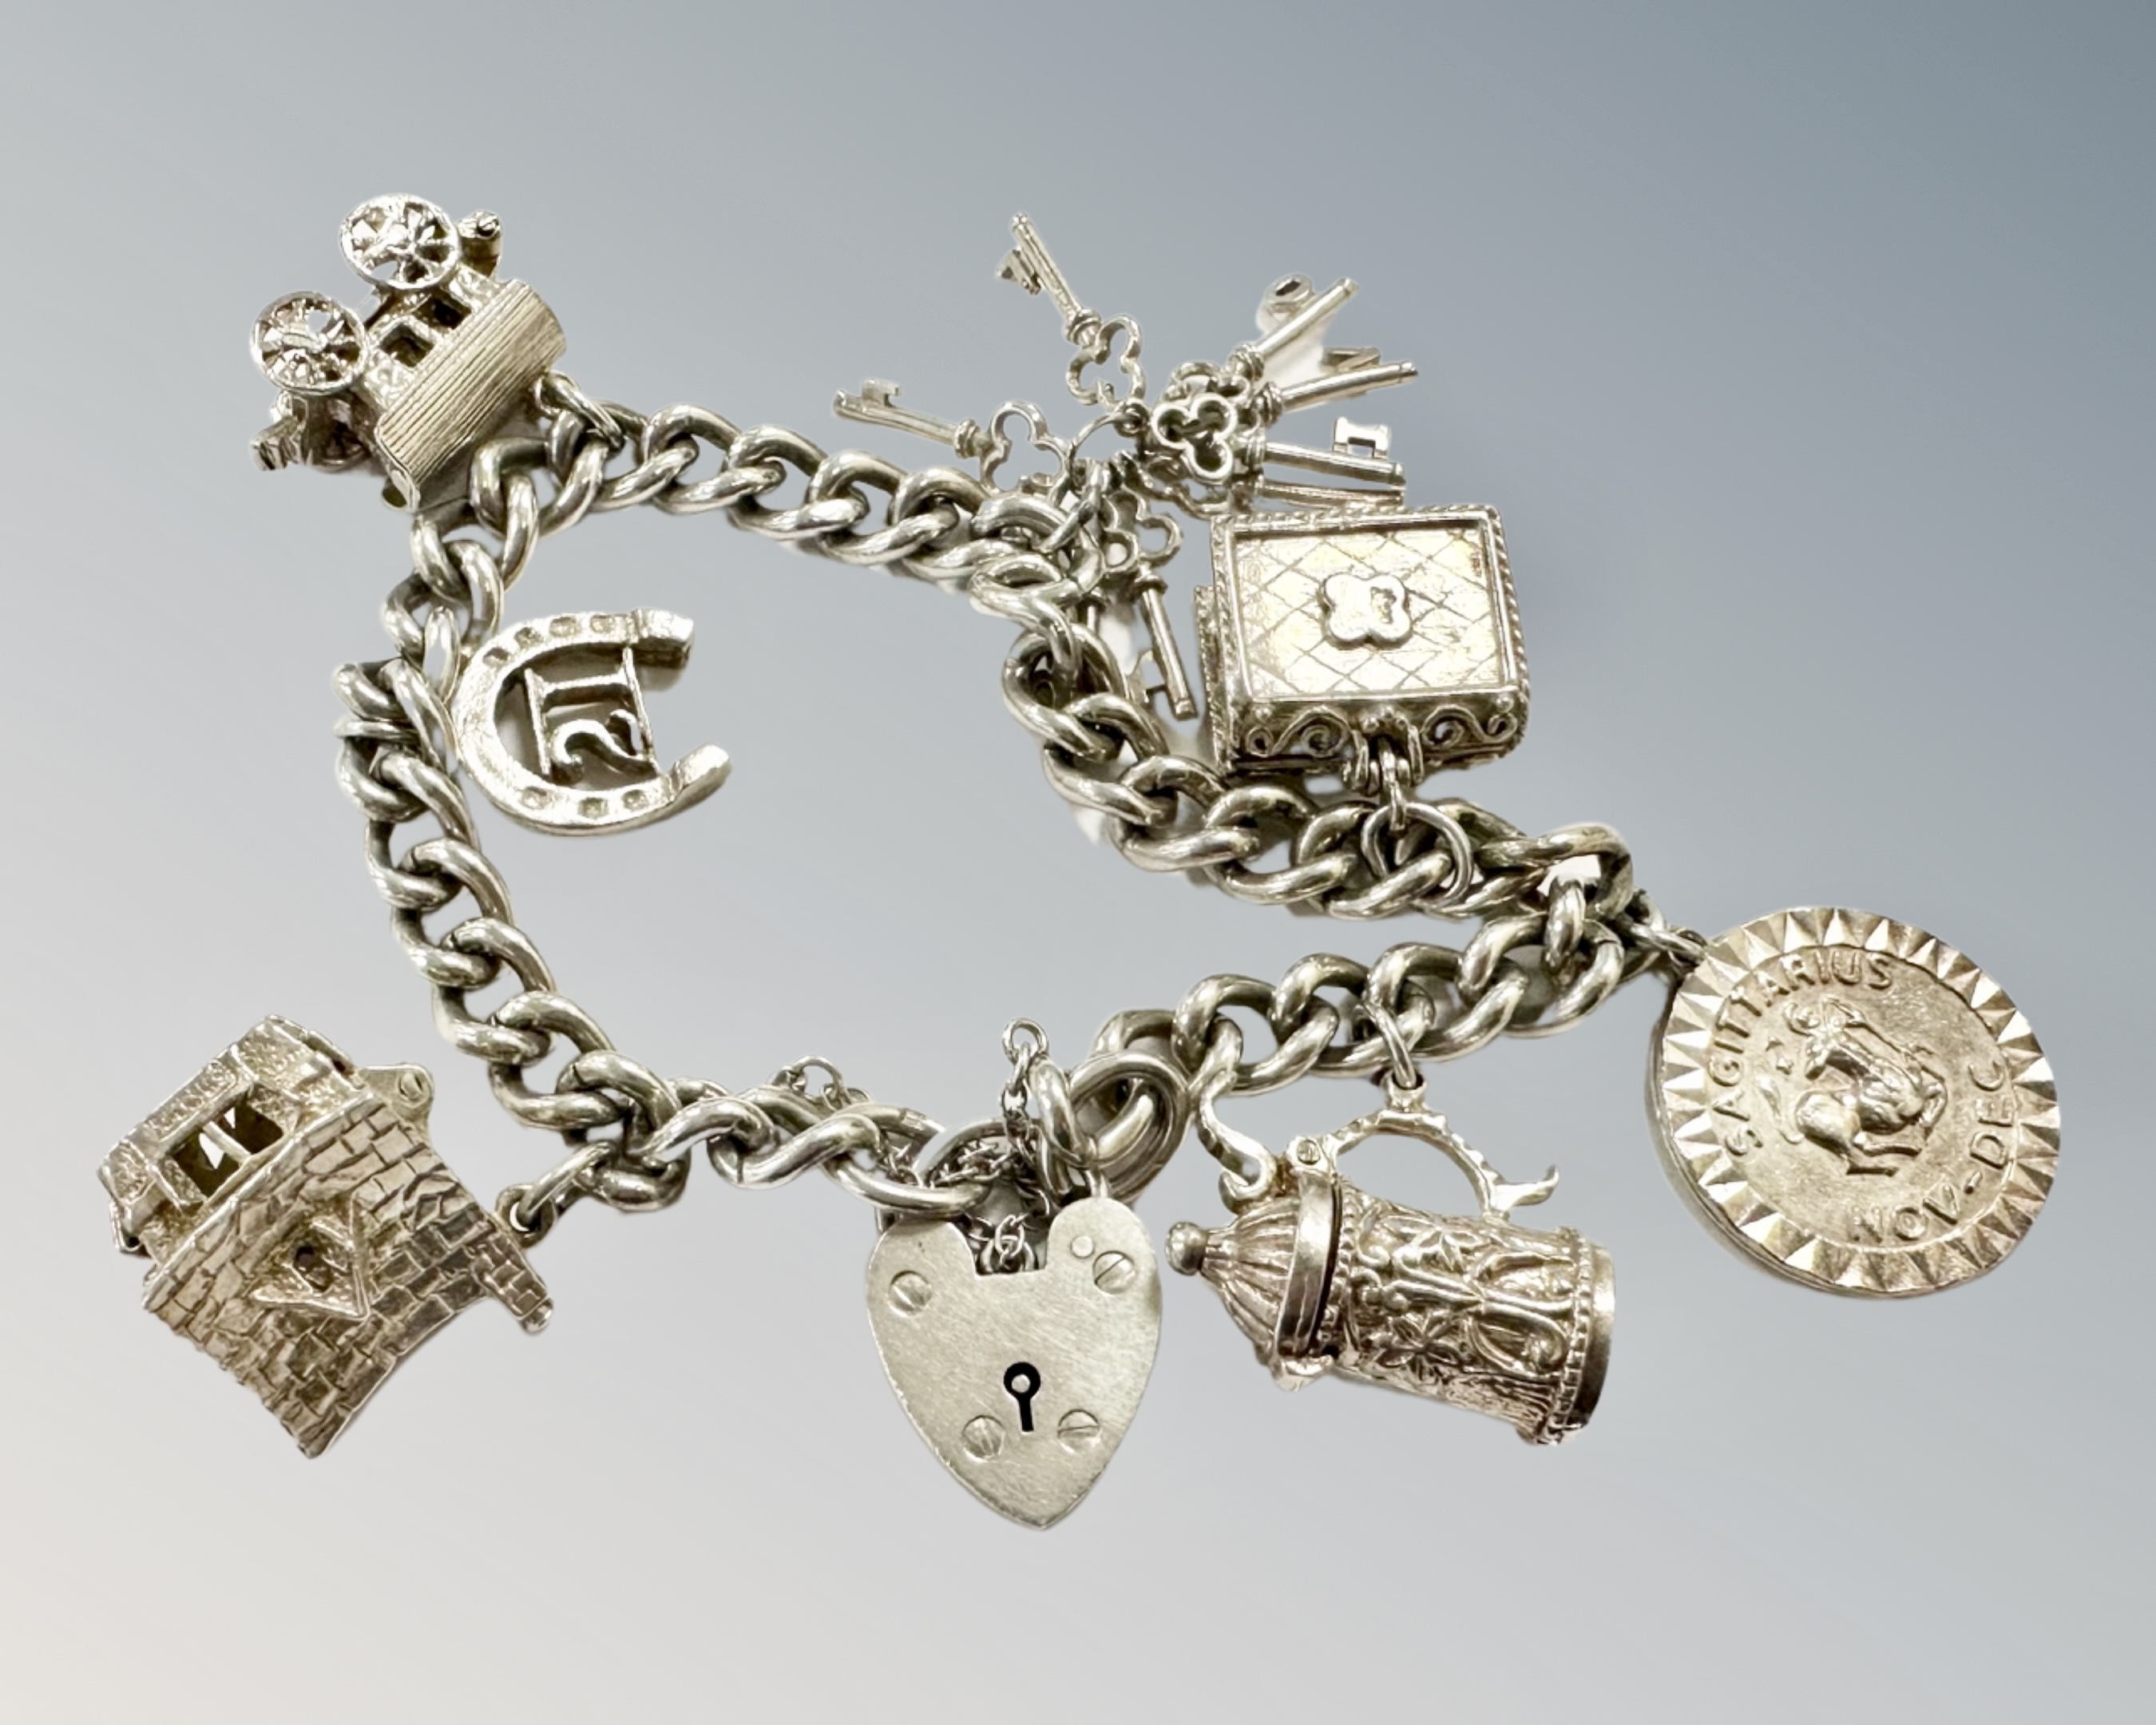 A silver charm bracelet, 55.